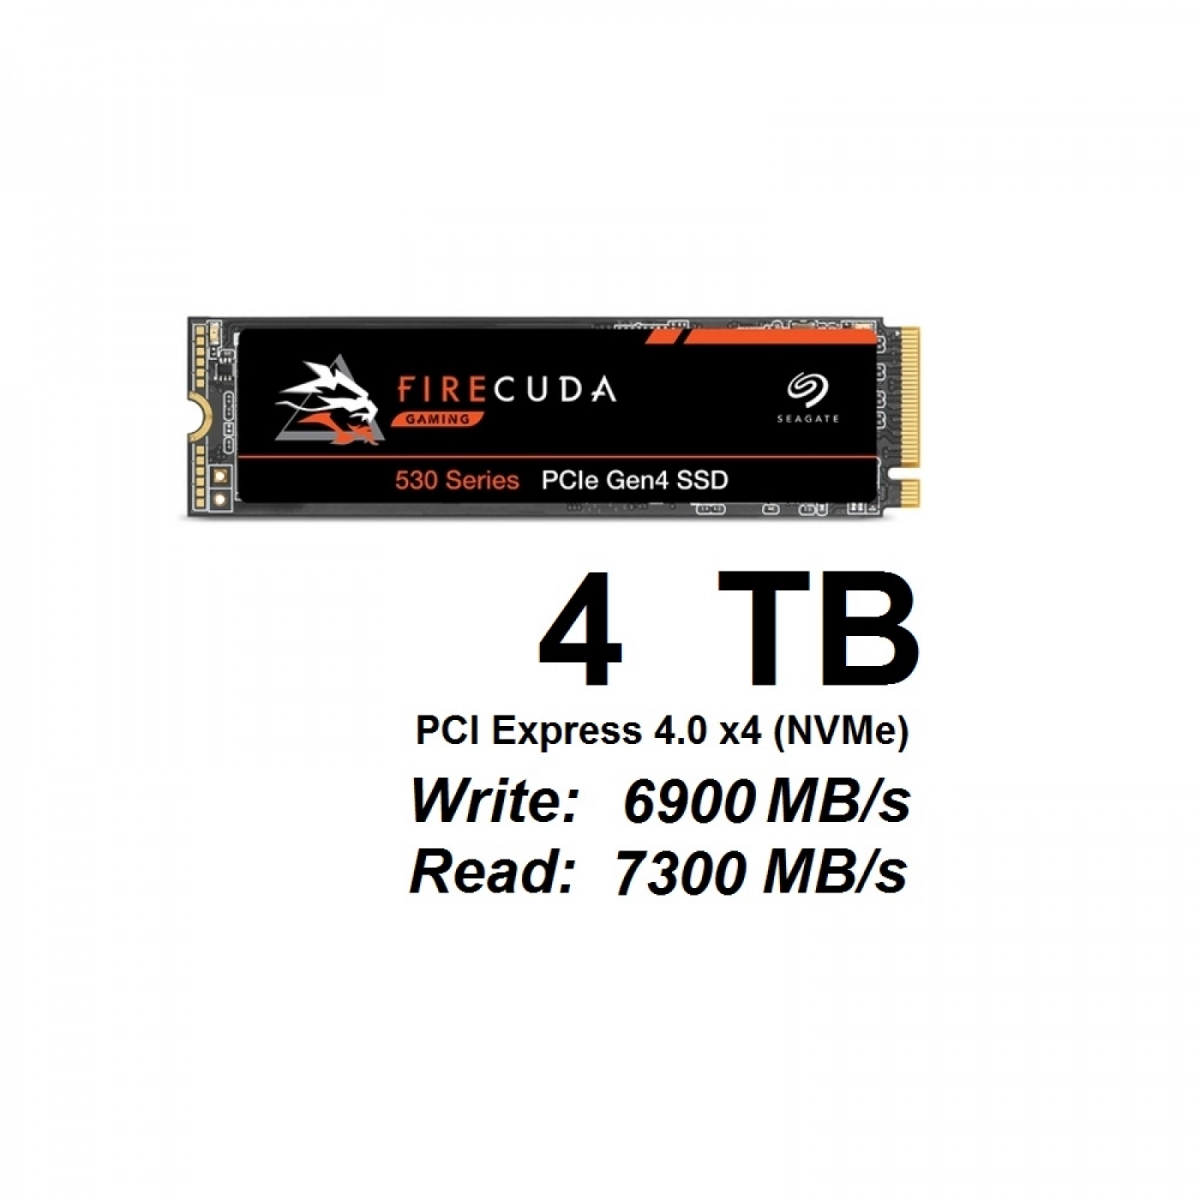 Seagate FireCuda 530 SSD 4TB PCI Express 4.0 x4 NVMe (ZP4000GM3A013)